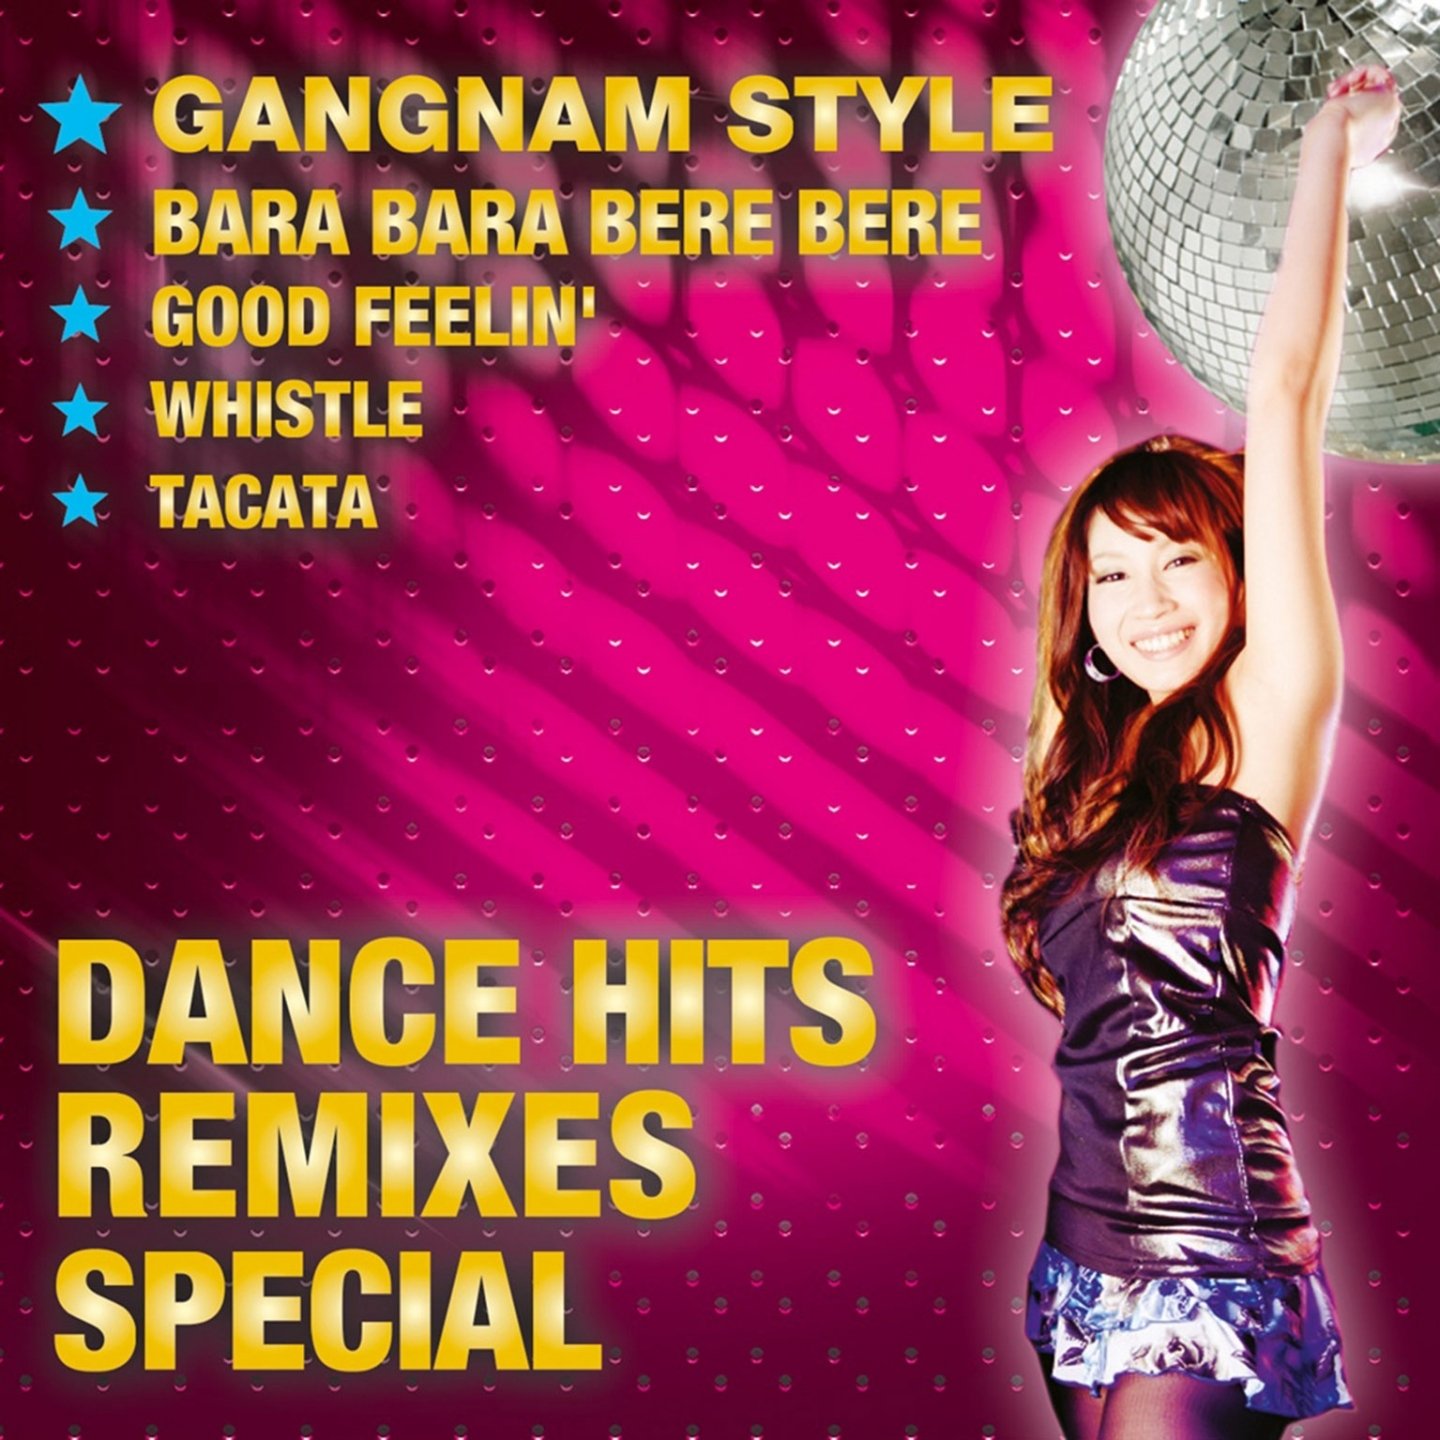 Обложки альбомов Dance Hits. Бара бара бара бере бере бере. Dance Hits and Remixes (Special Edition) сборник 2001. DJ Tacata.